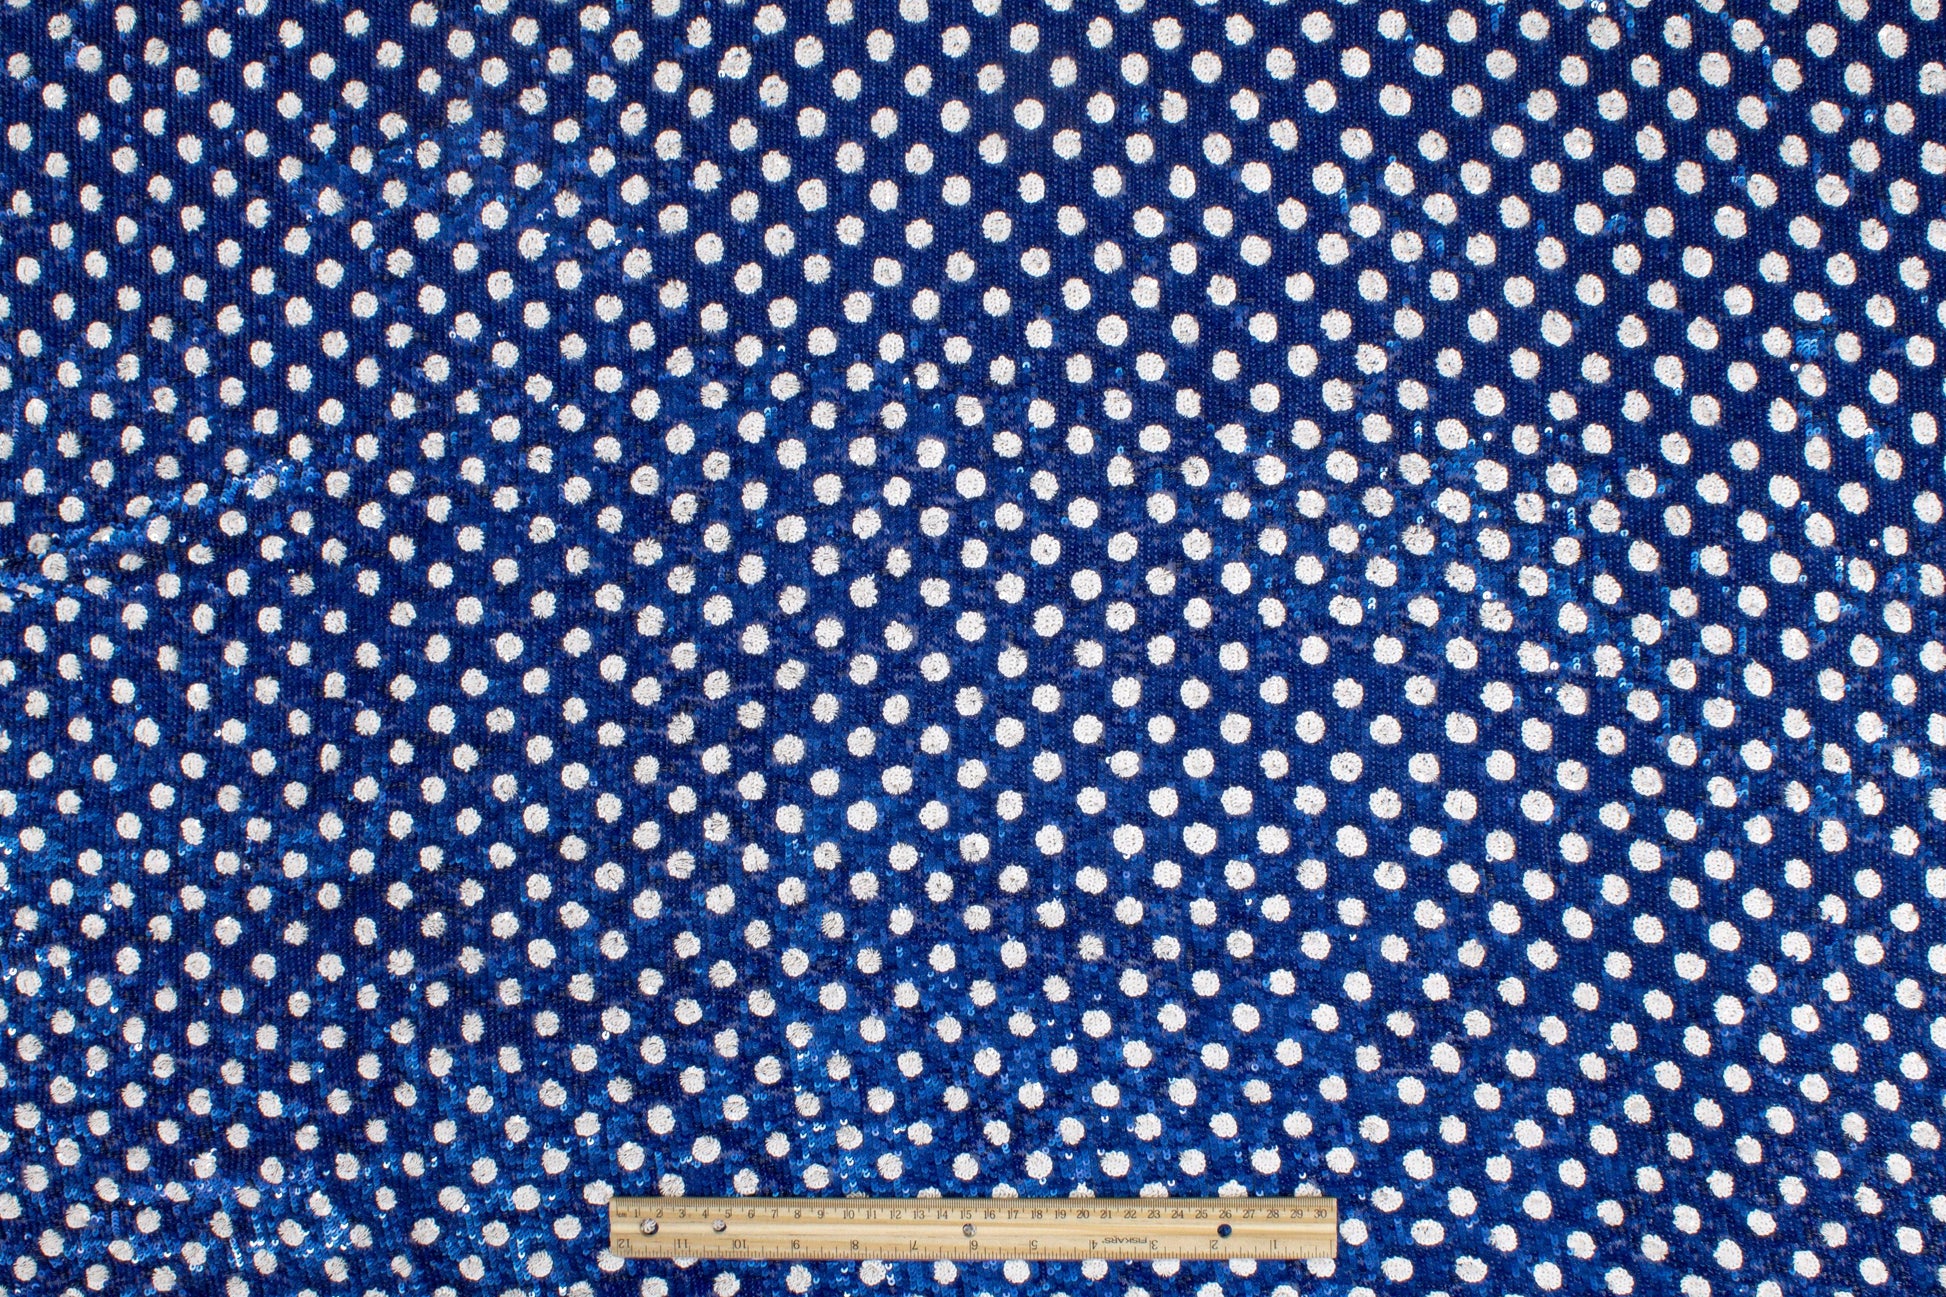 Polka Dot Sequins - Royal Blue and White - Prime Fabrics